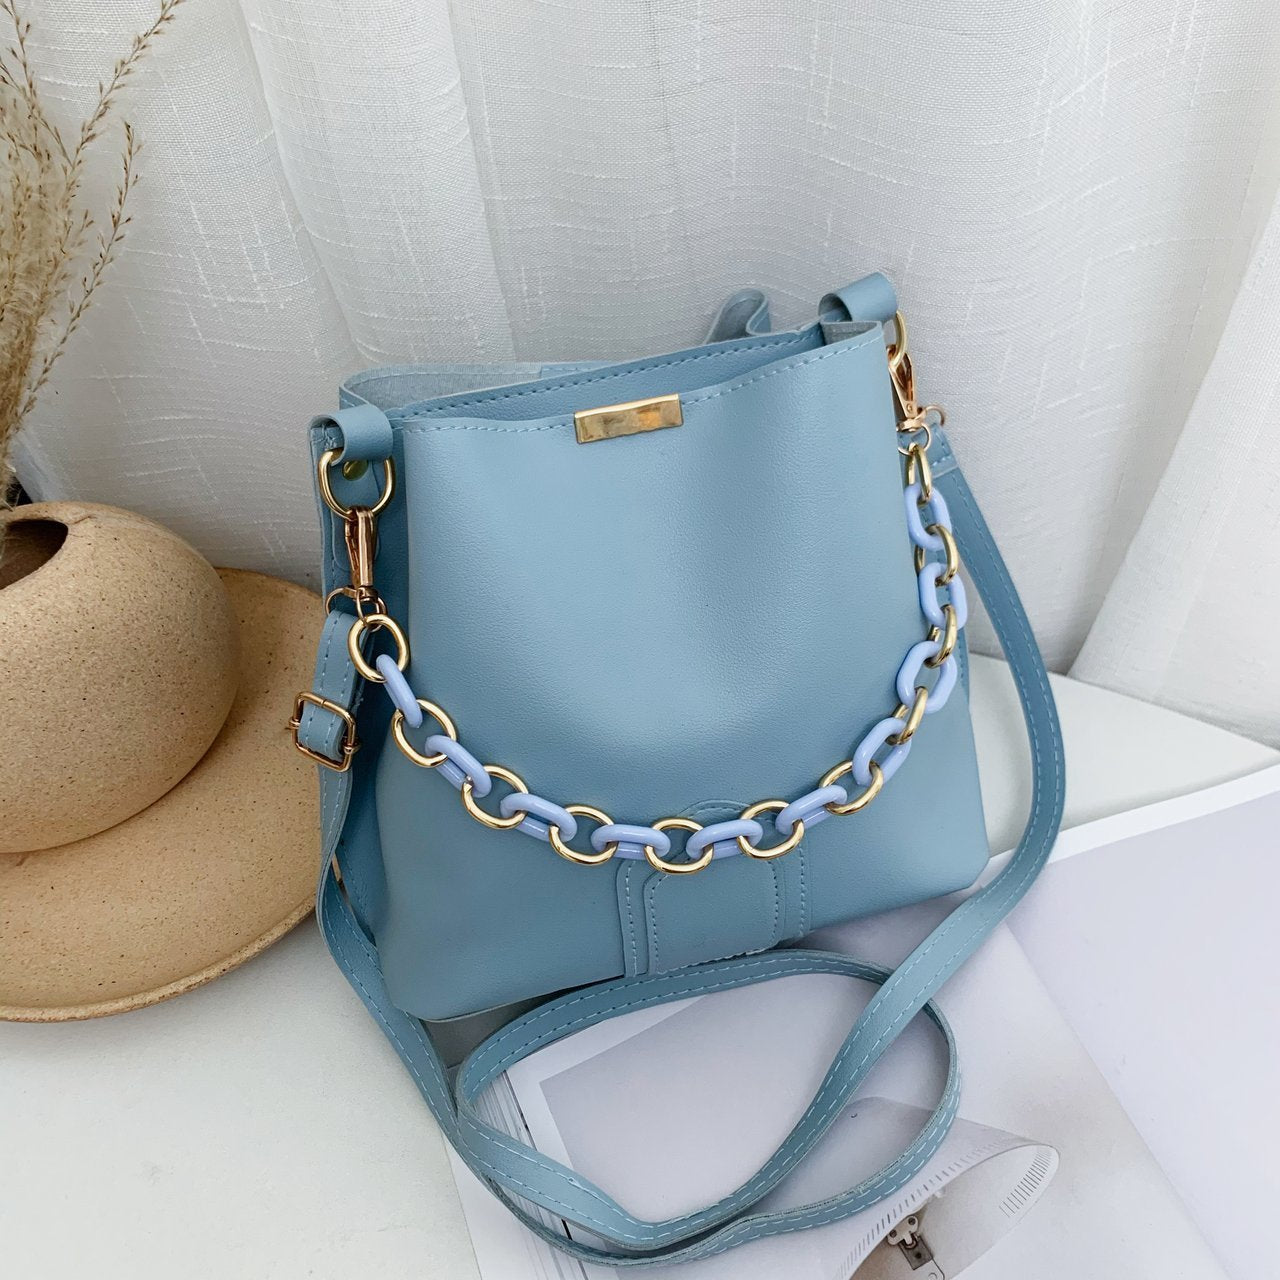 Casual Chains Bucket Bags 2021 Women Summer Messenger Bag Leather Bags Beach Lady Travel Purses and Handbags Shoulder Bag Bolsa